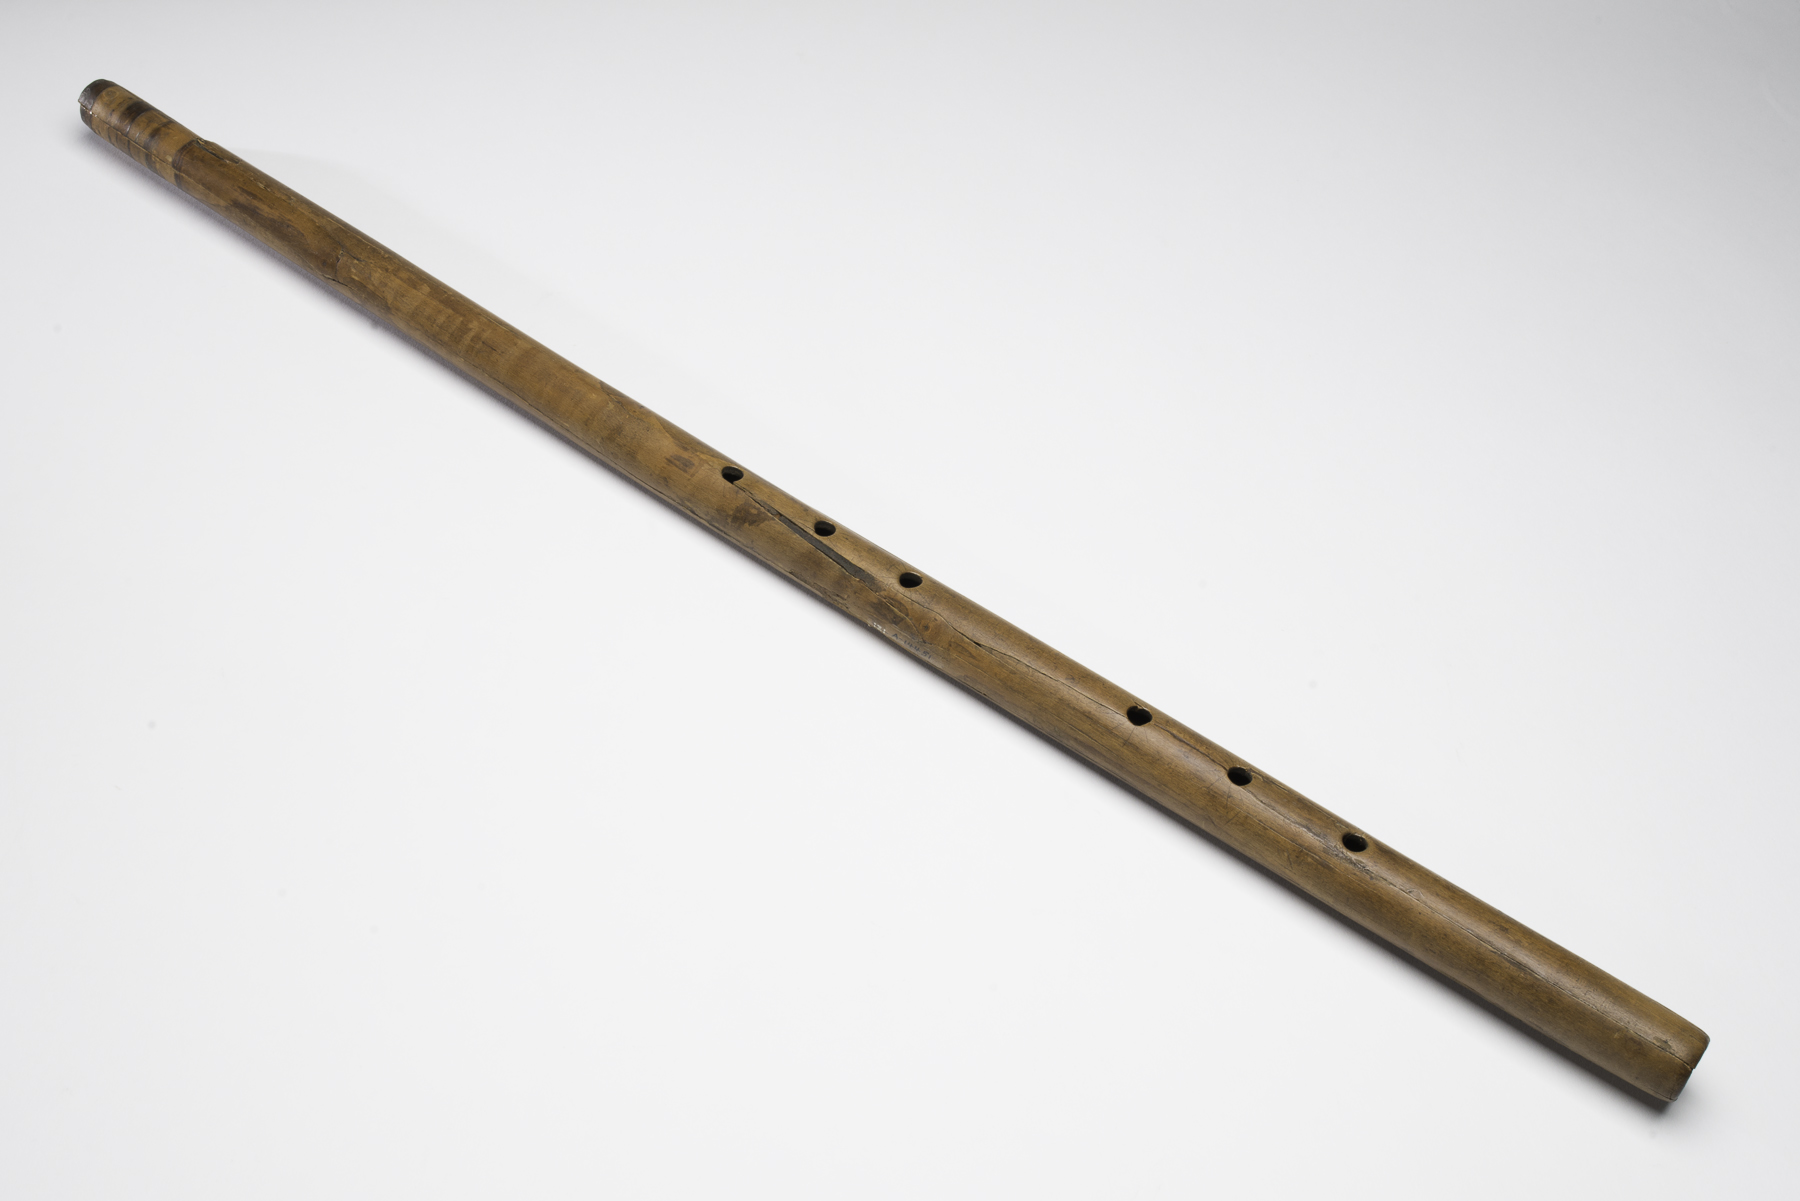 A-14551, 620–670 CE (Common Era=AD). Length: 68.5 cm, diameter: 2.8 cm.